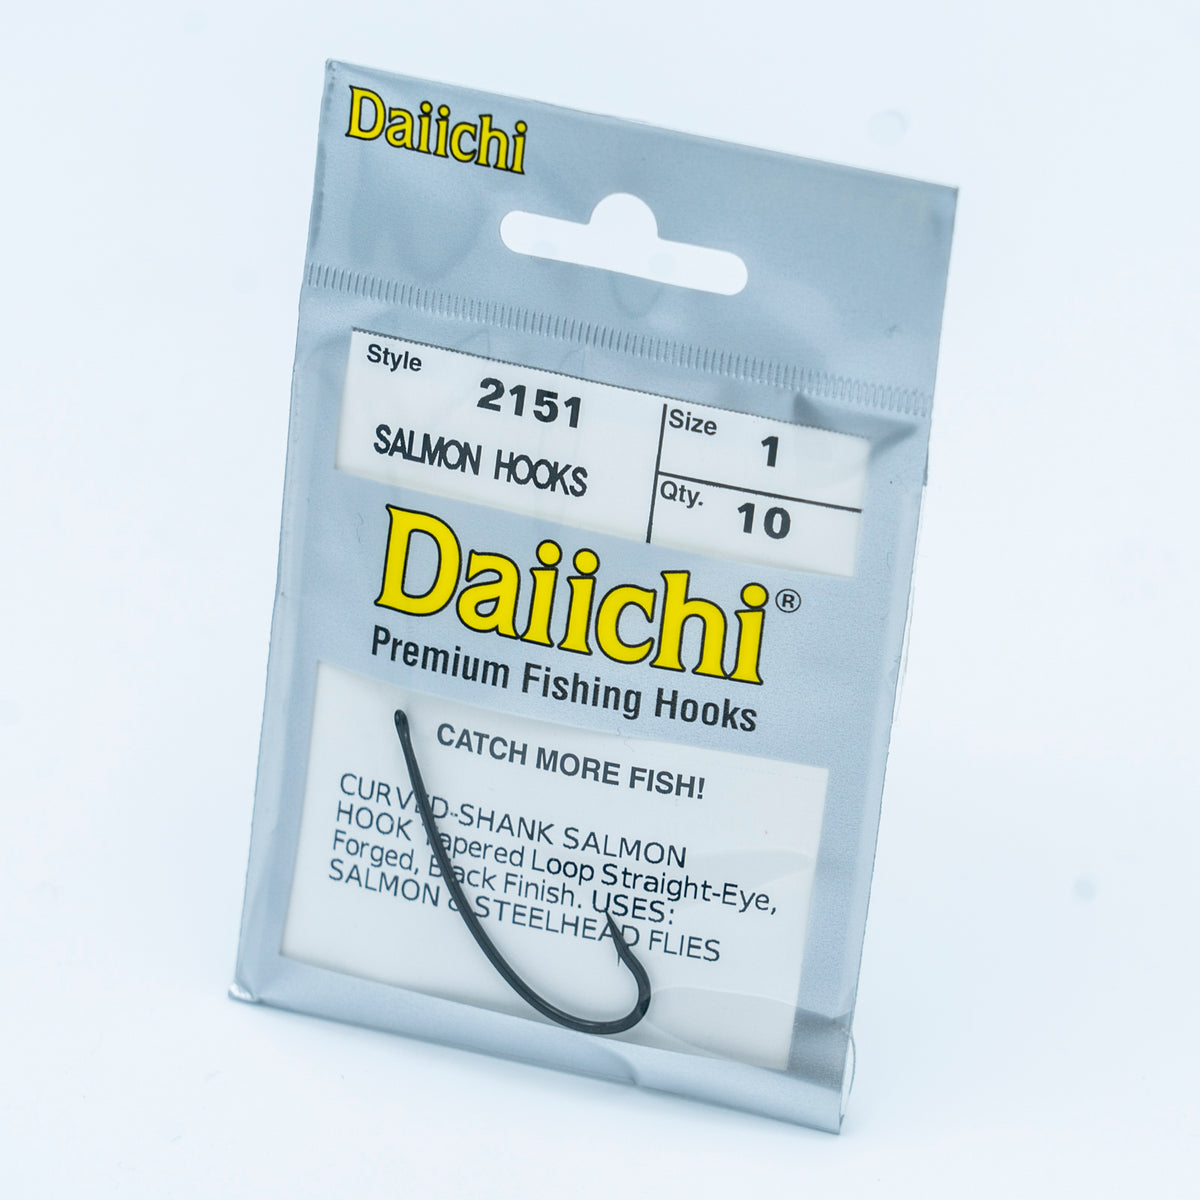 Daiichi 2151 Salmon/Steelhead Hooks at The Fly Shop